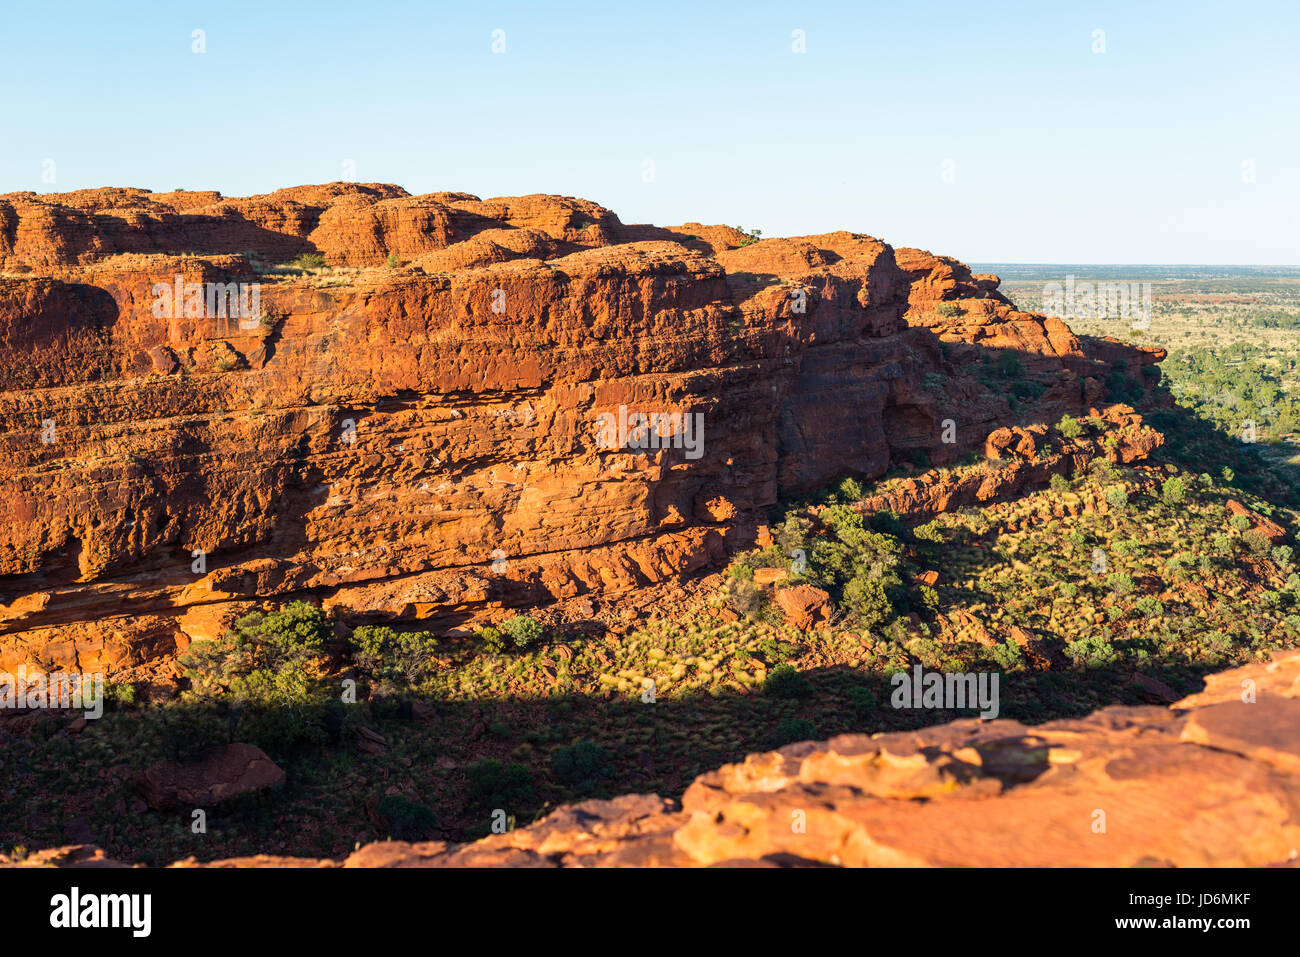 Dramatic scenery at Kings Canyon, Northern Territory, Australia Stock Photo